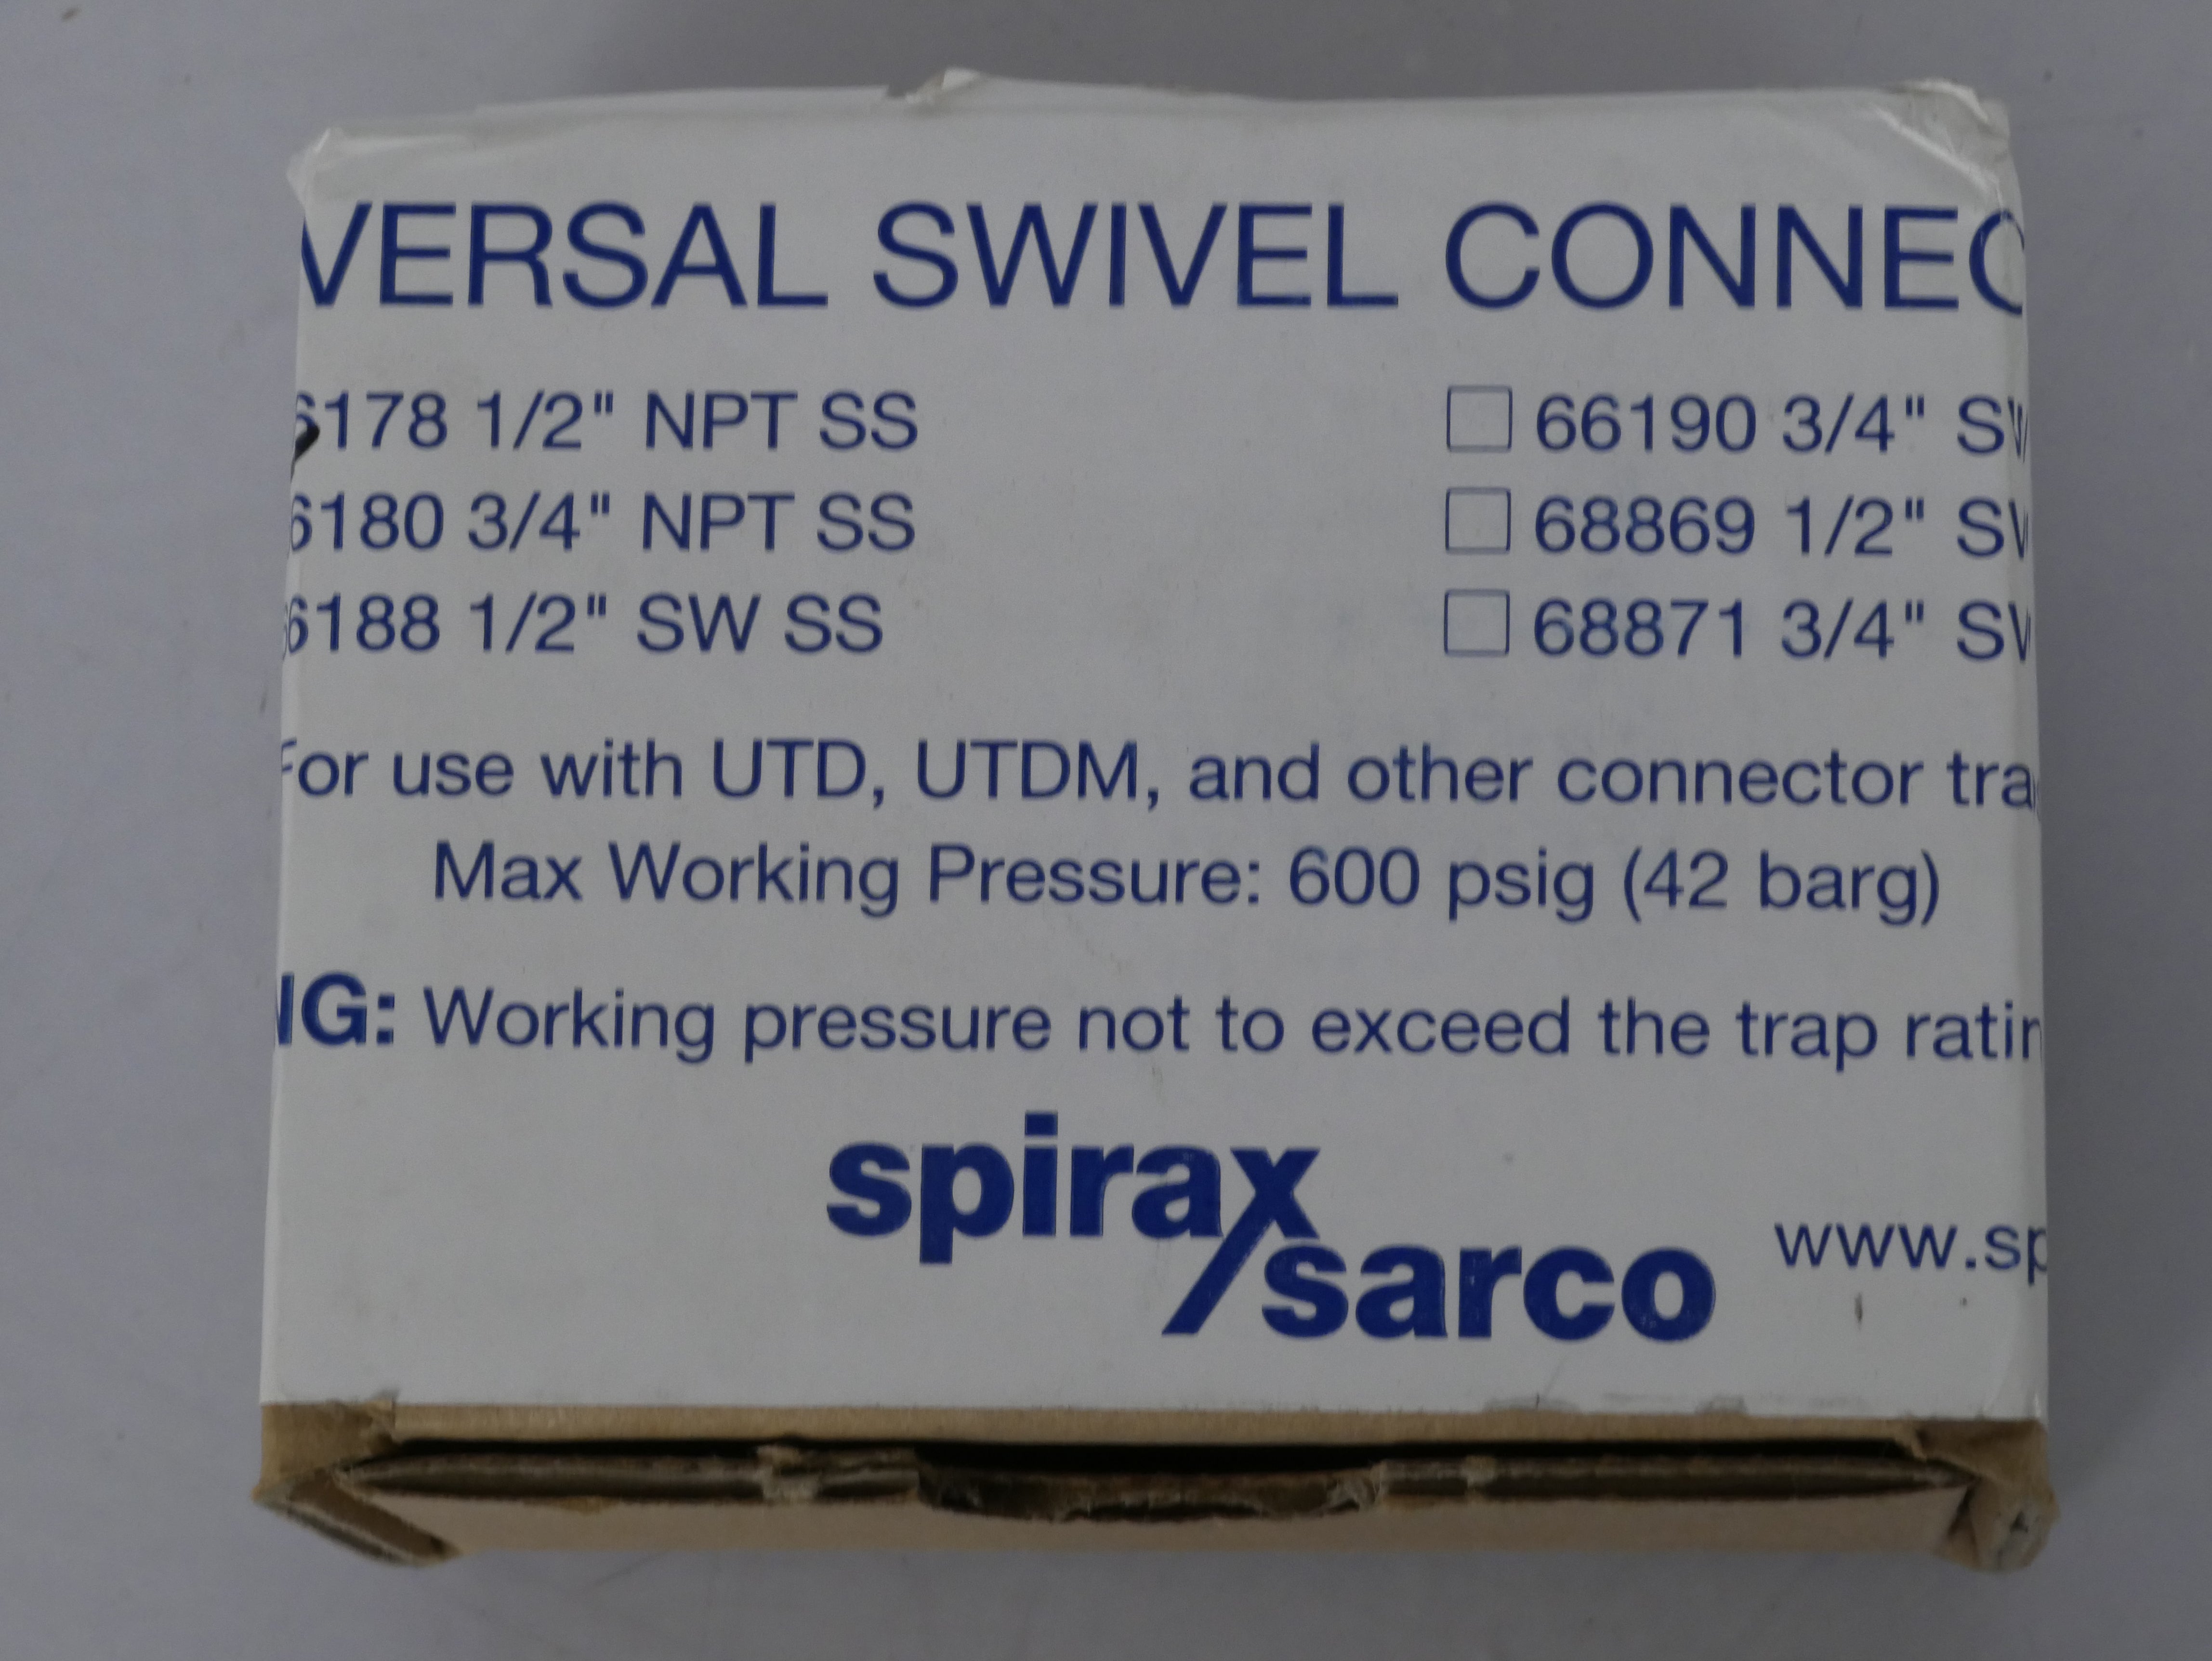 Spirax Sarco 3/4" NPT Universal Swivel Connector 66180